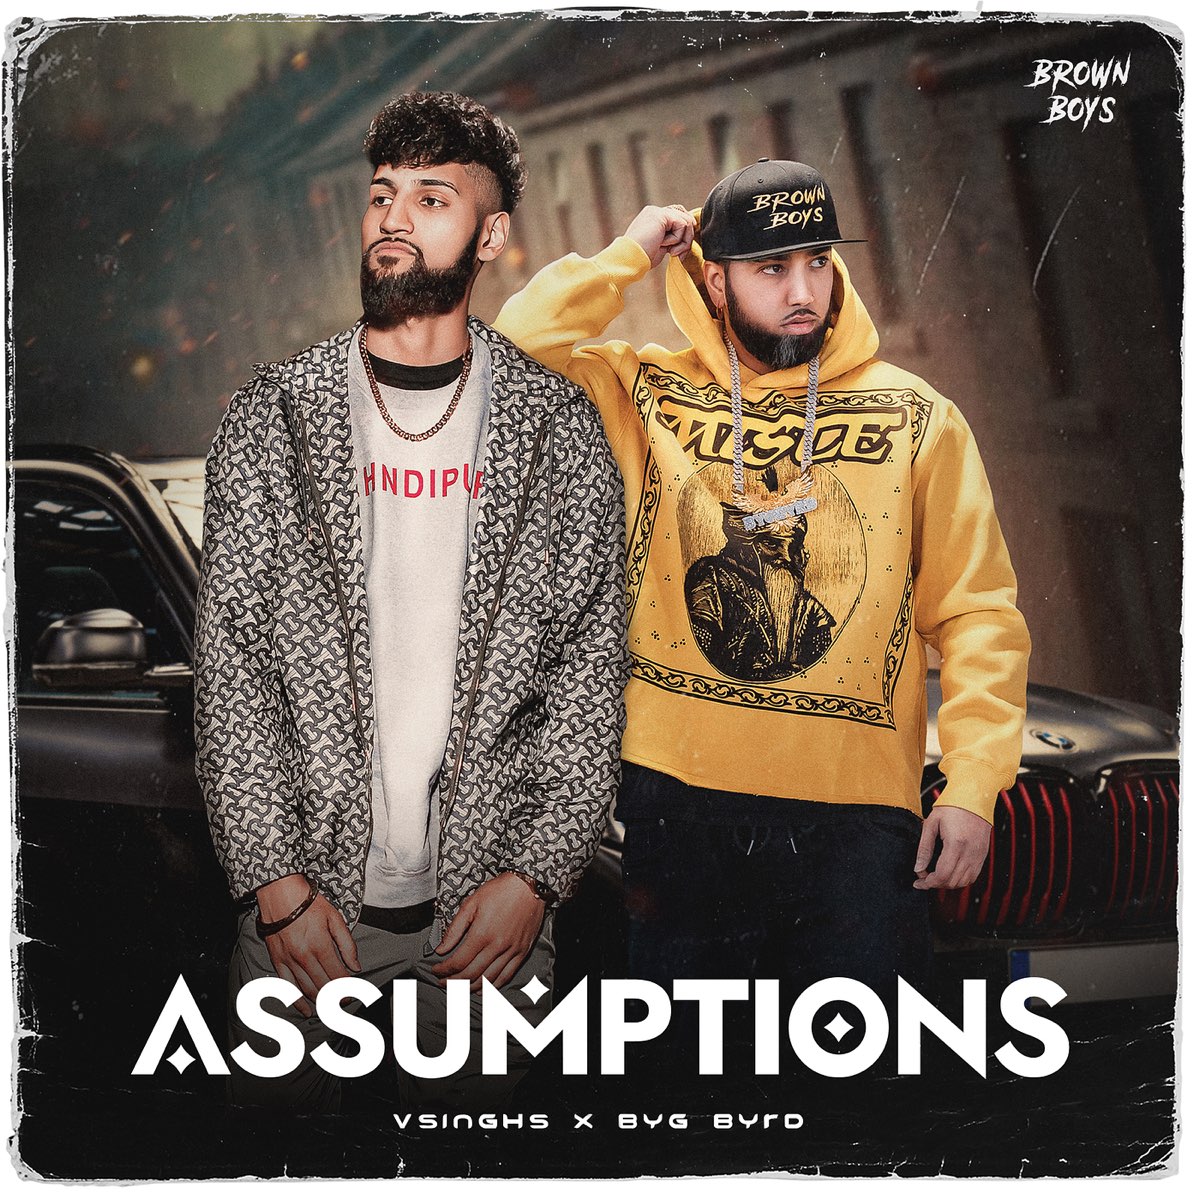 ‎Assumptions - Single by Vsinghs & Byg Byrd on Apple Music